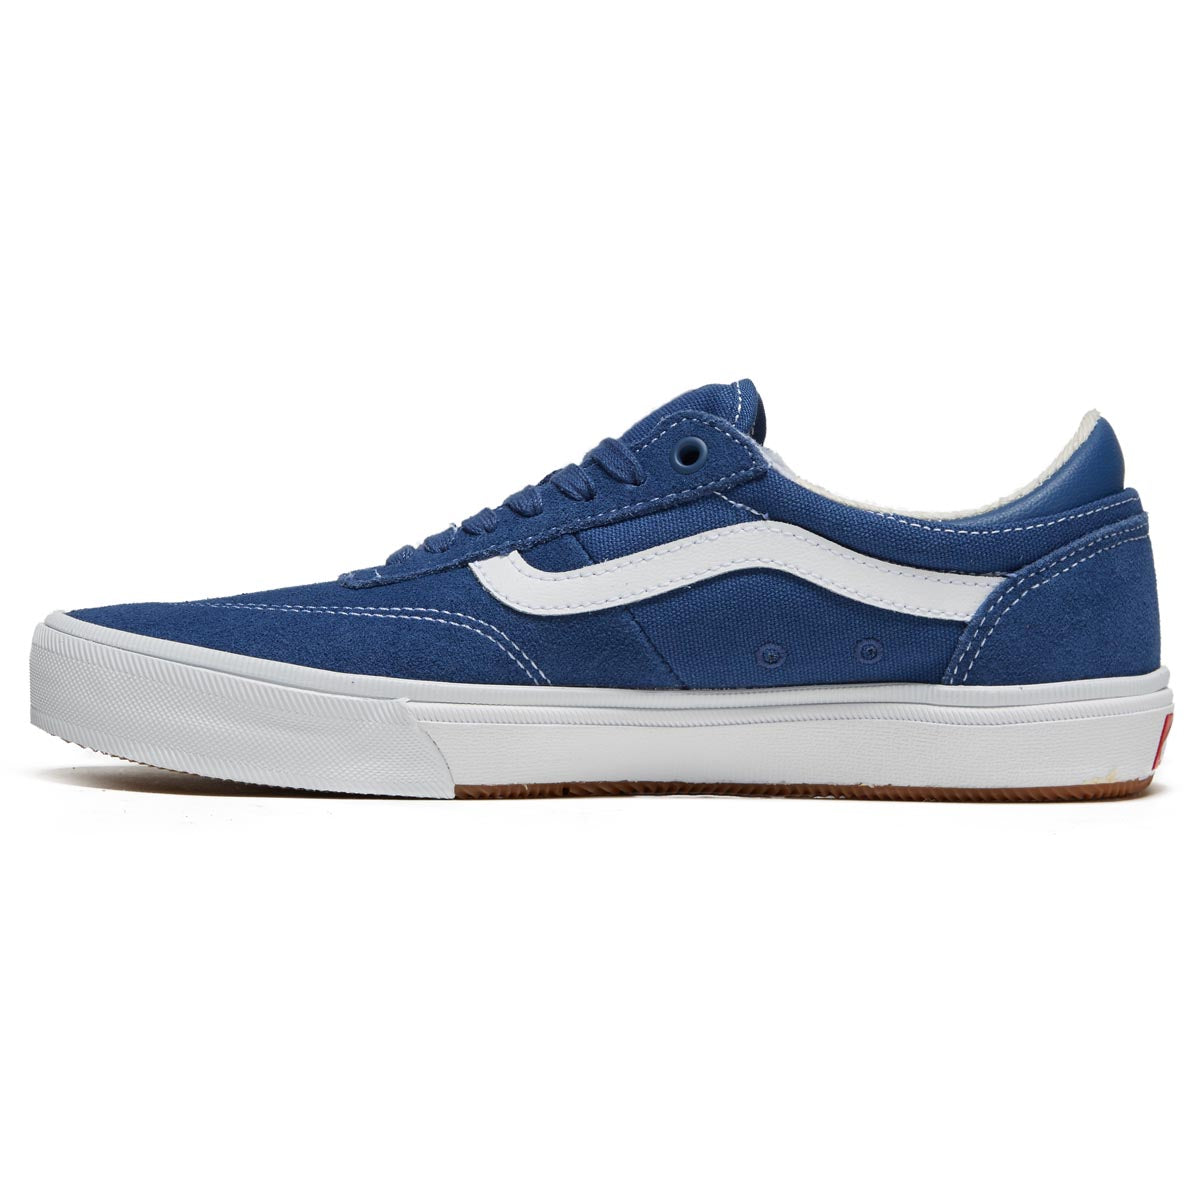 Vans Gilbert Crockett Shoes - Blue/White image 2